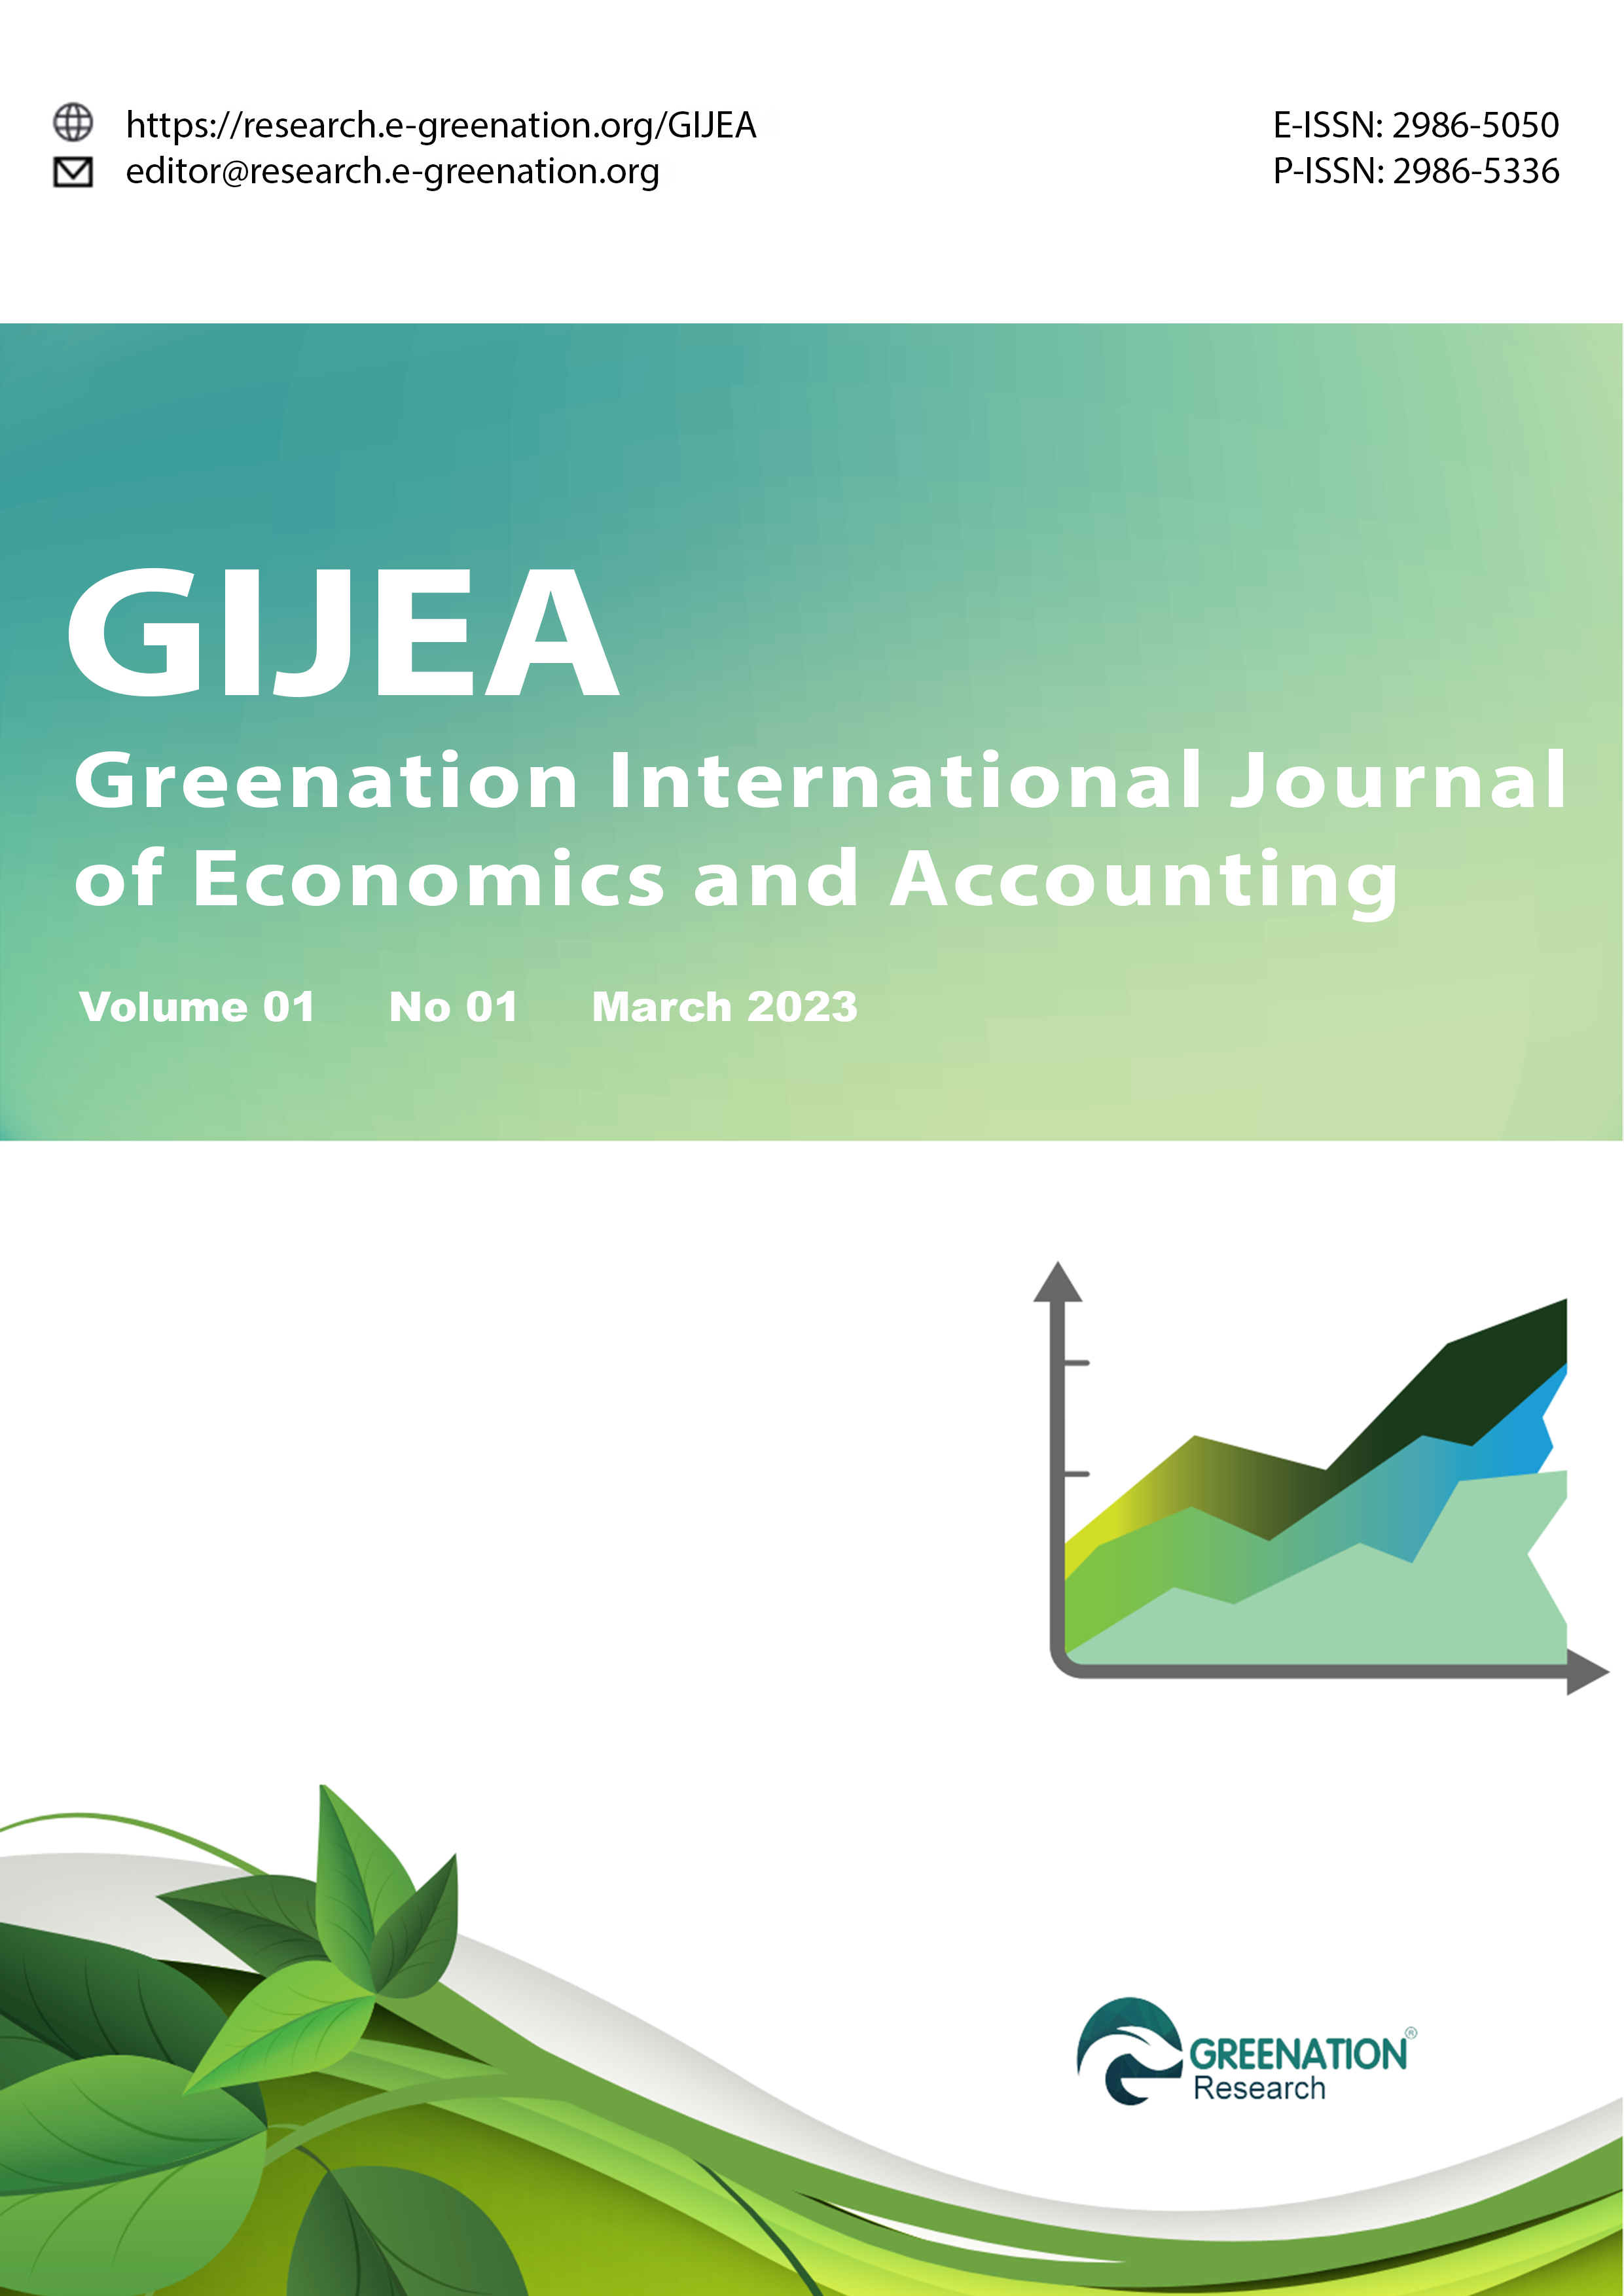 					View Vol. 1 No. 1 (2023): (GIJEA) Greenation International Journal of Economics and Accounting (March 2023)
				